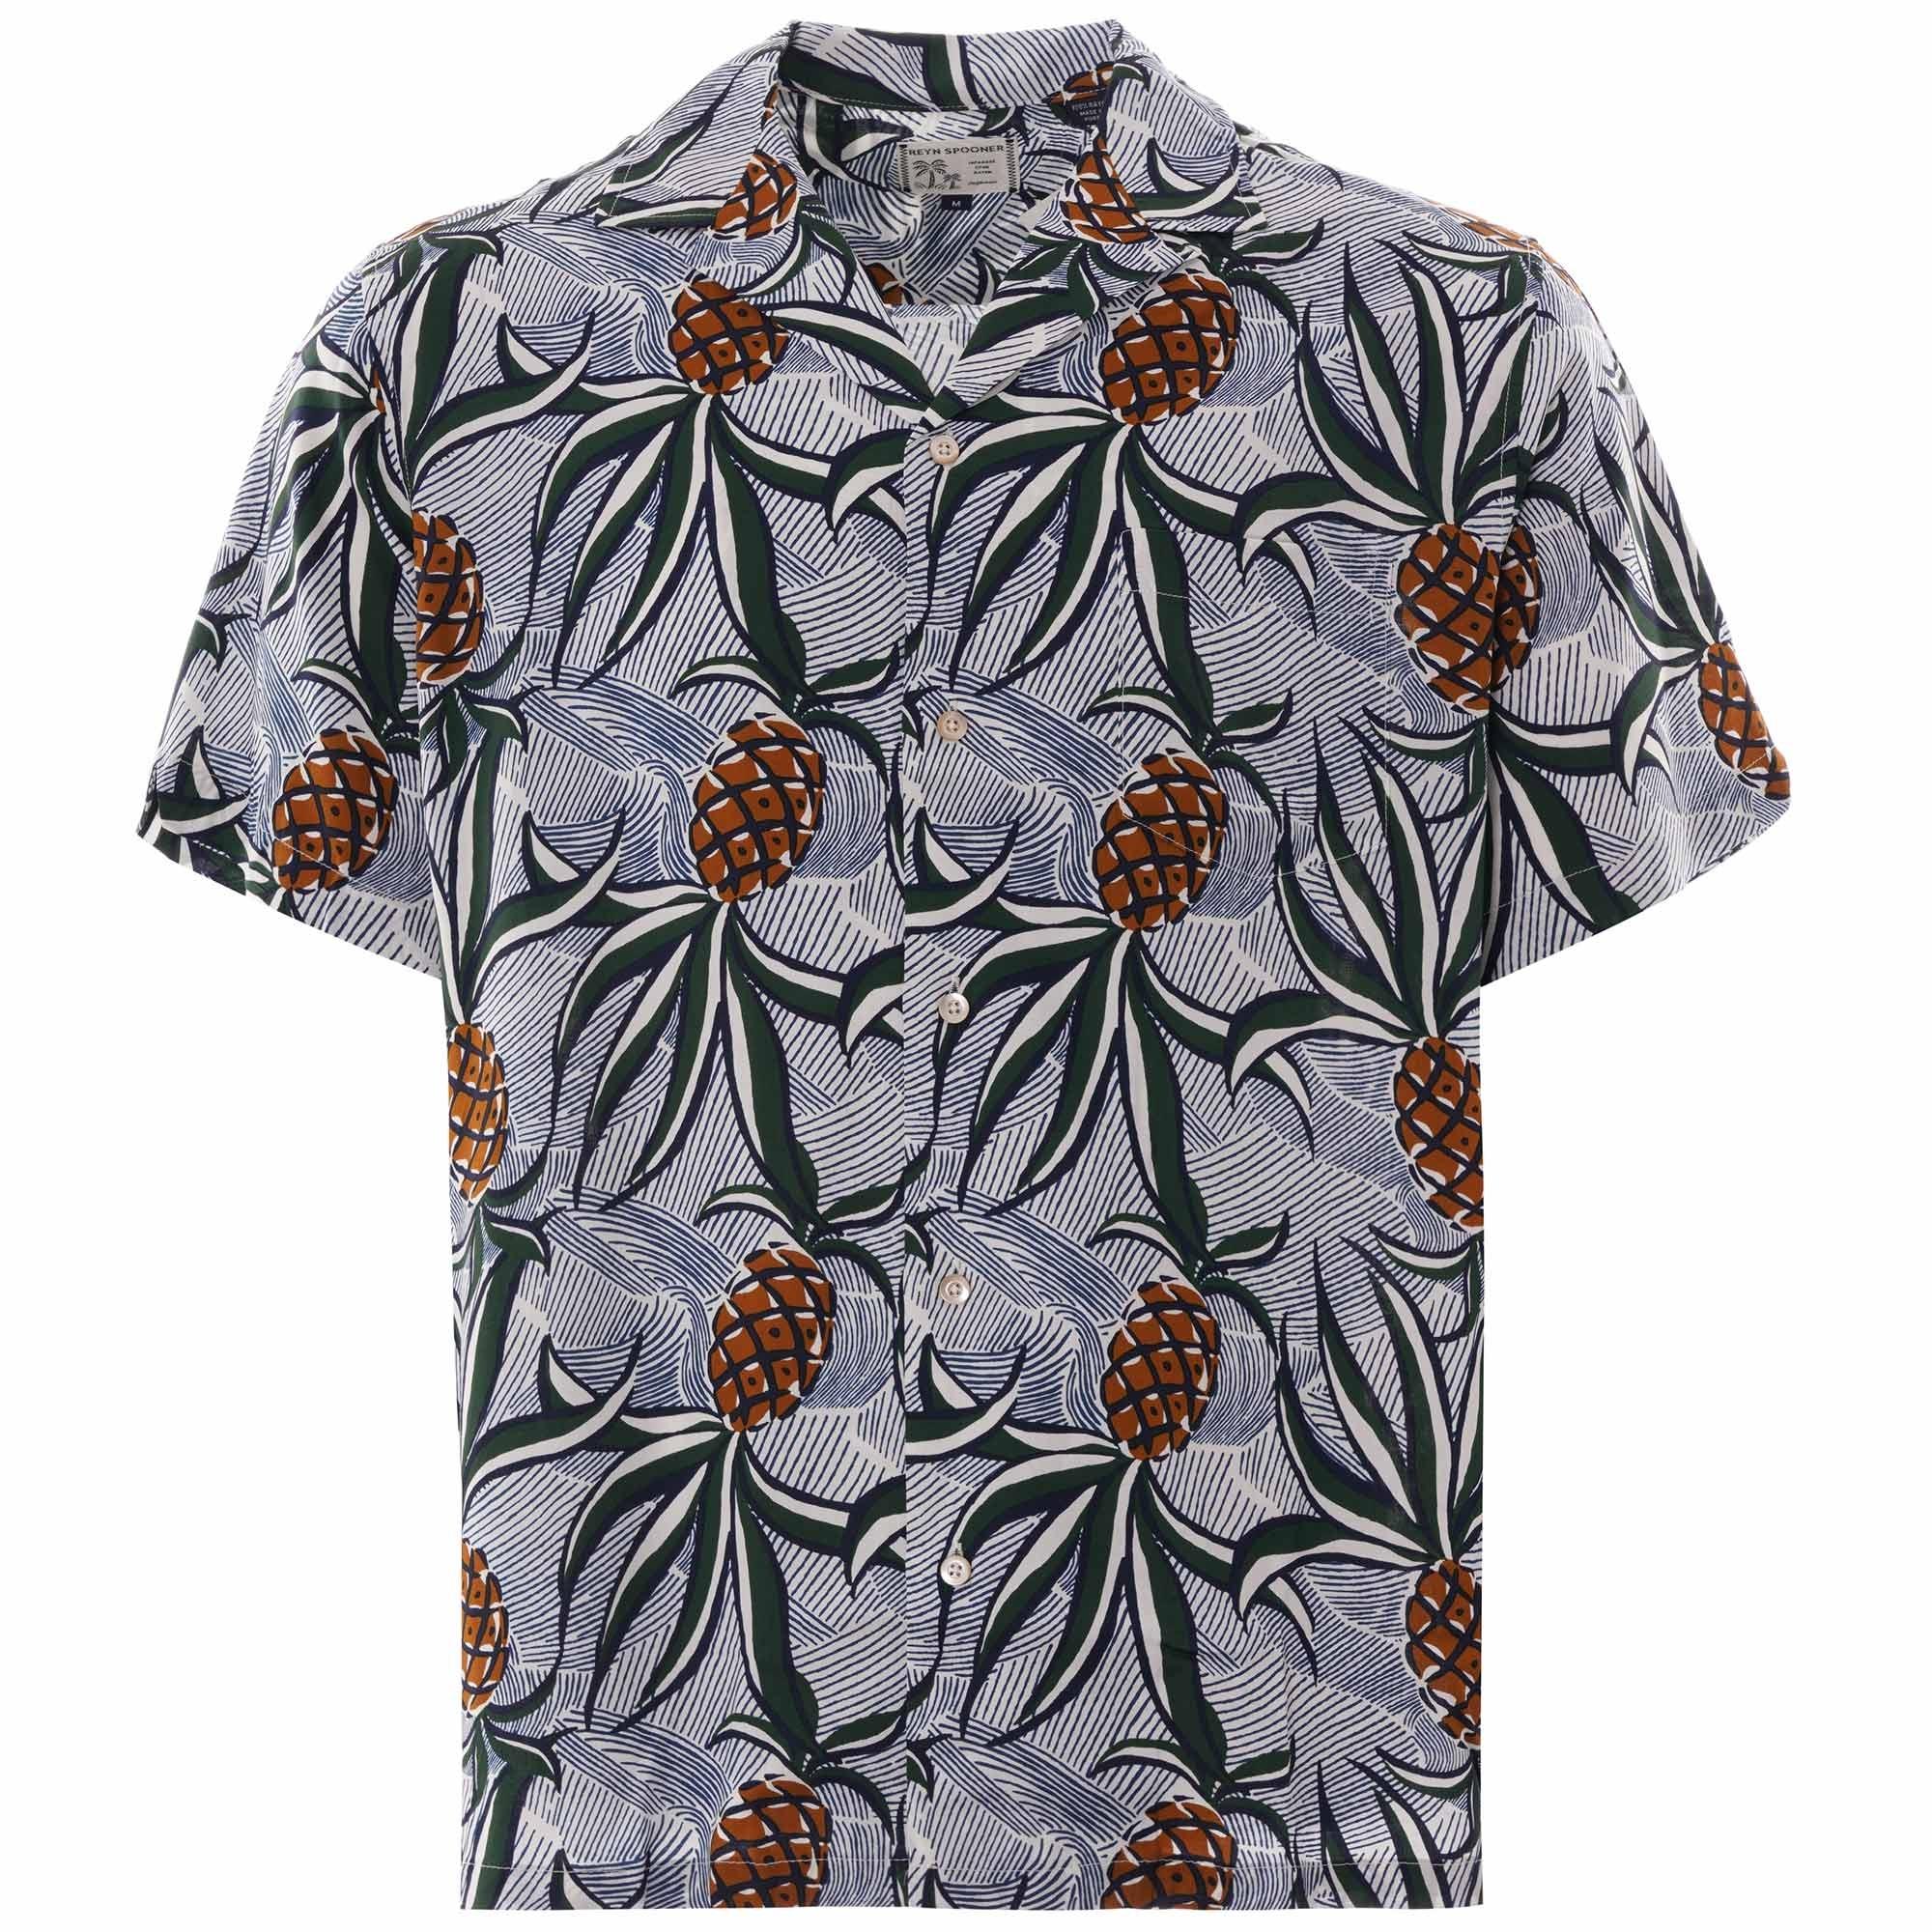 Reyn Spooner Whacky Pineapple Rayon Camp Shirt for Men - Lyst